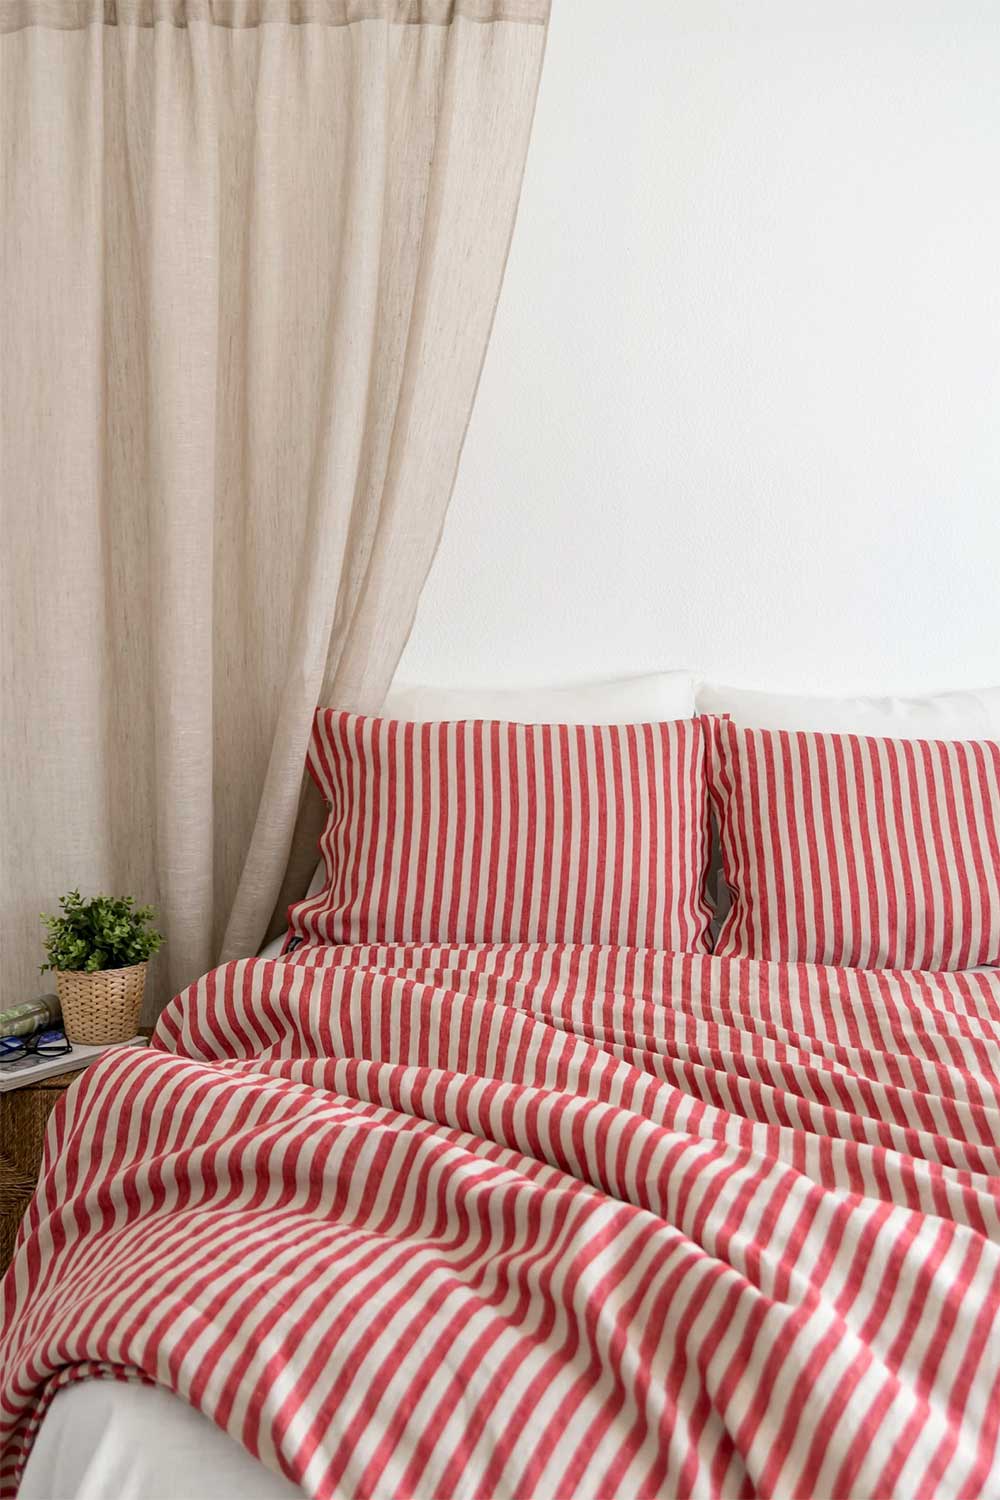 red stripe linen bedding set from Lino Takas on Etsy.